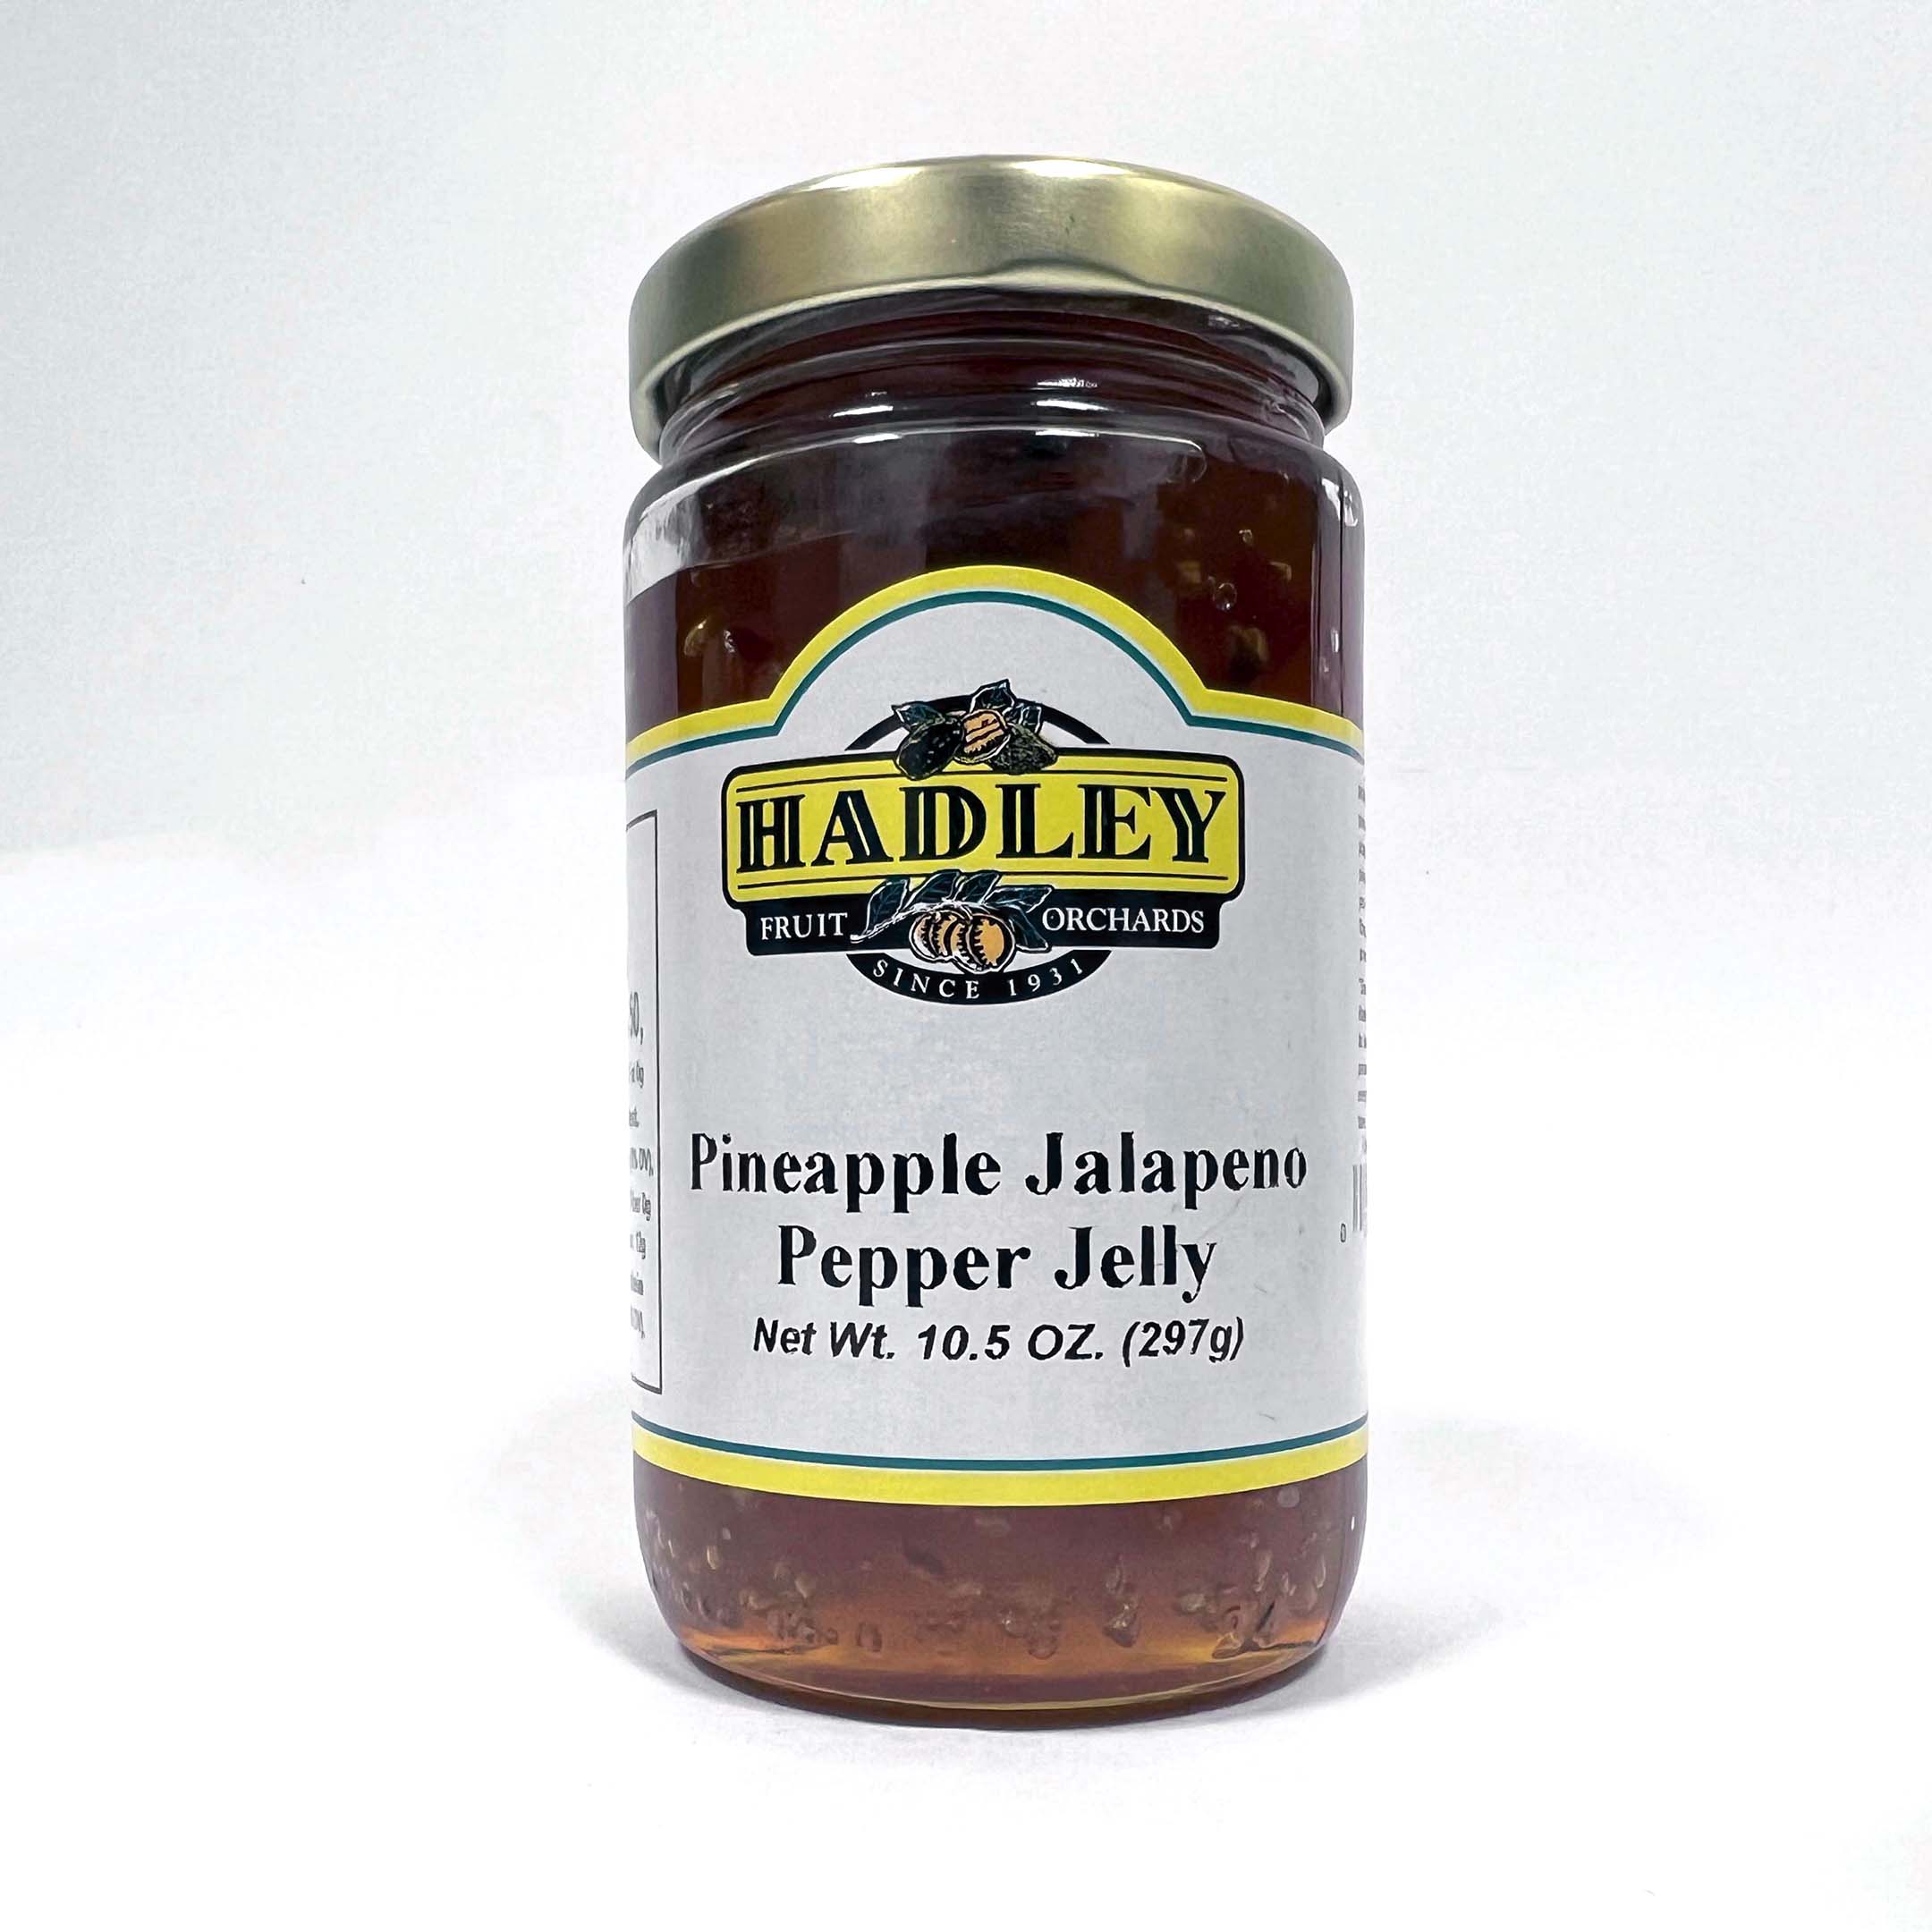 Pinapple Jalapeno Pepper Jelly 10.5oz